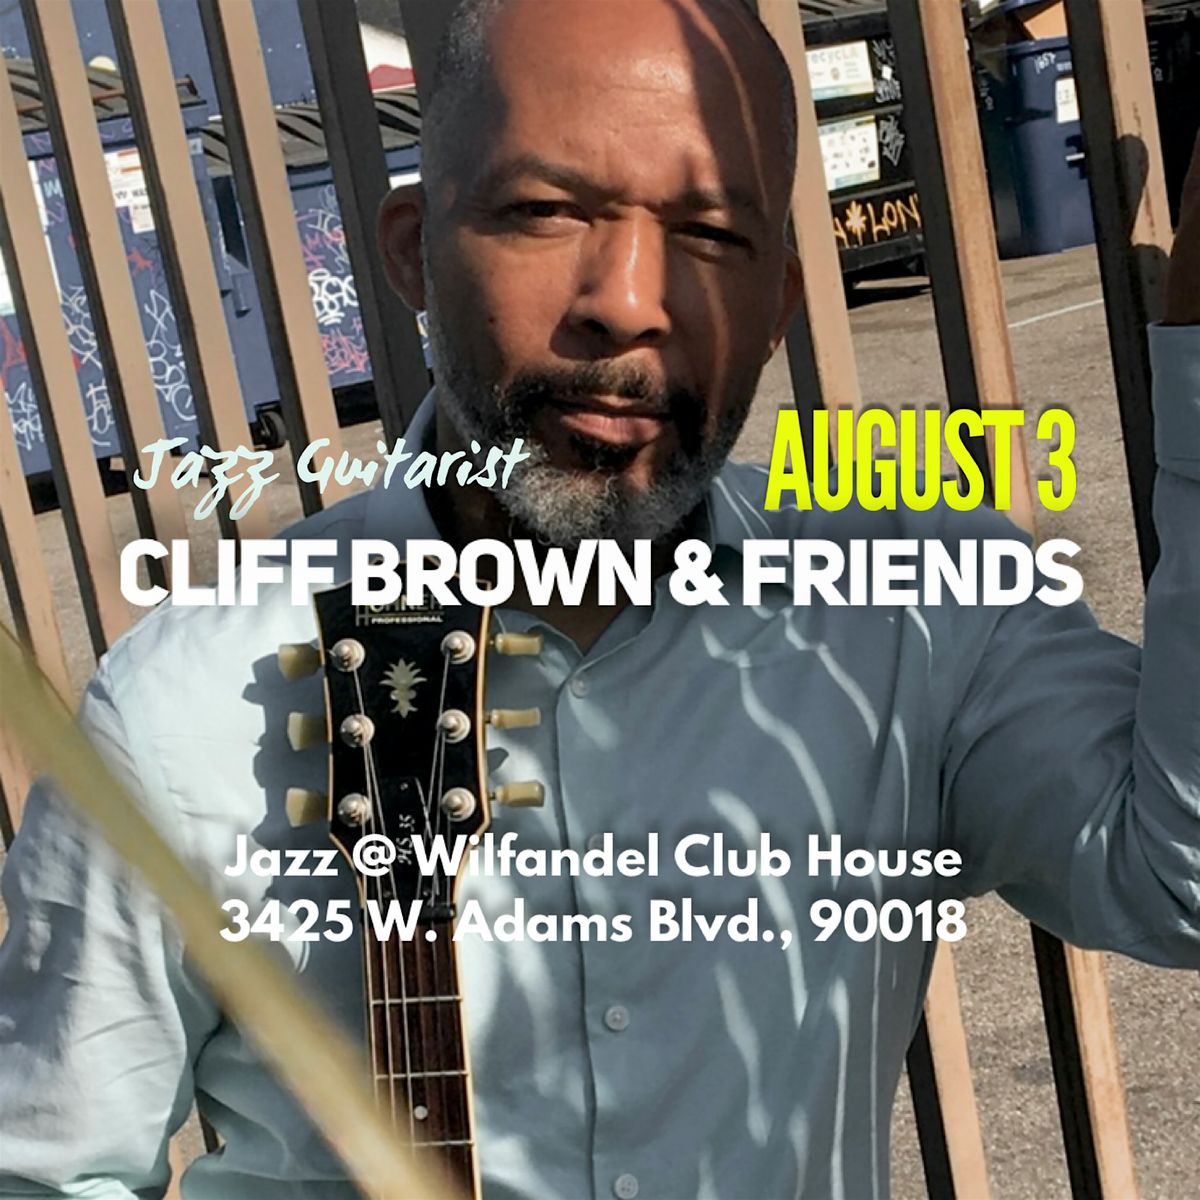 Cliff Brown & Friends @ Wilfandel Club House